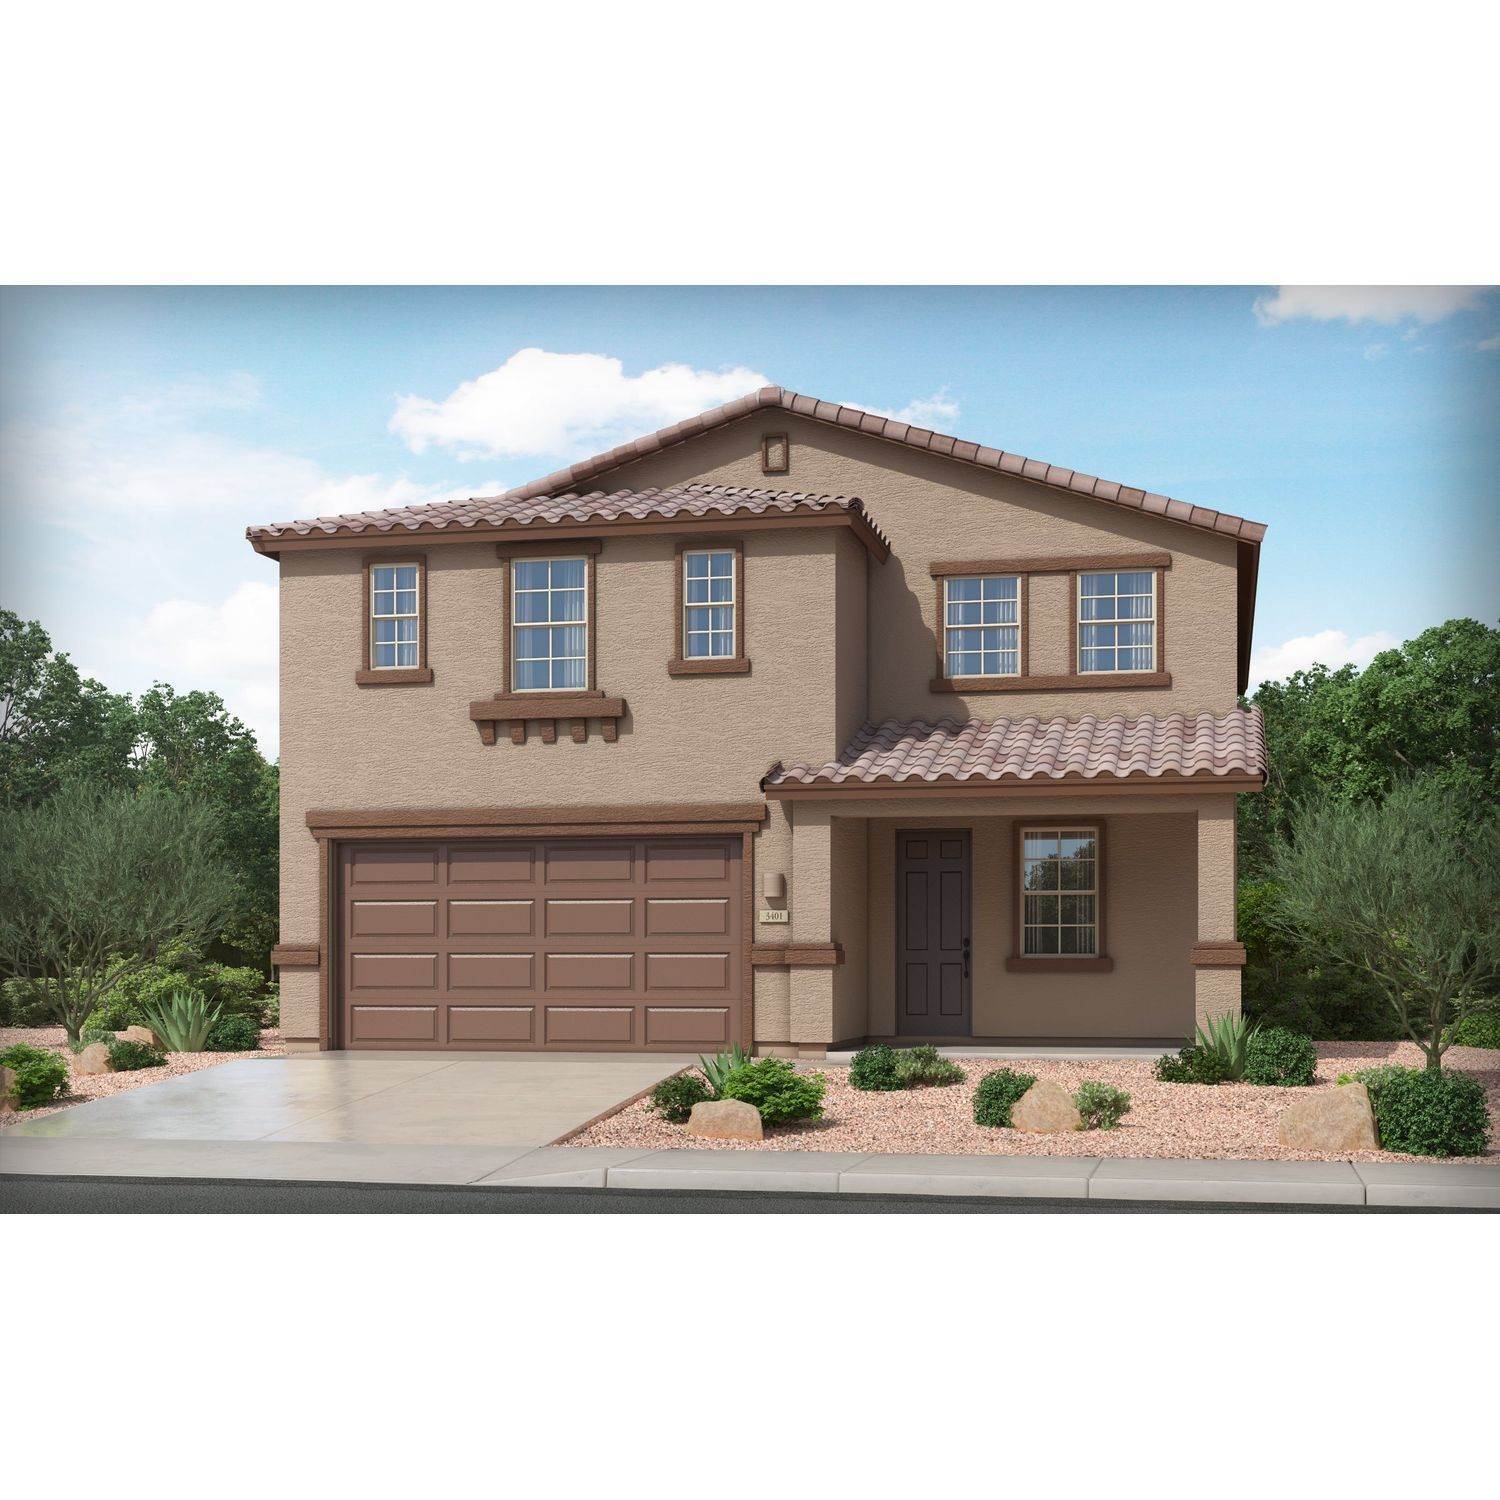 Single Family for Sale at Tucson, AZ 85747